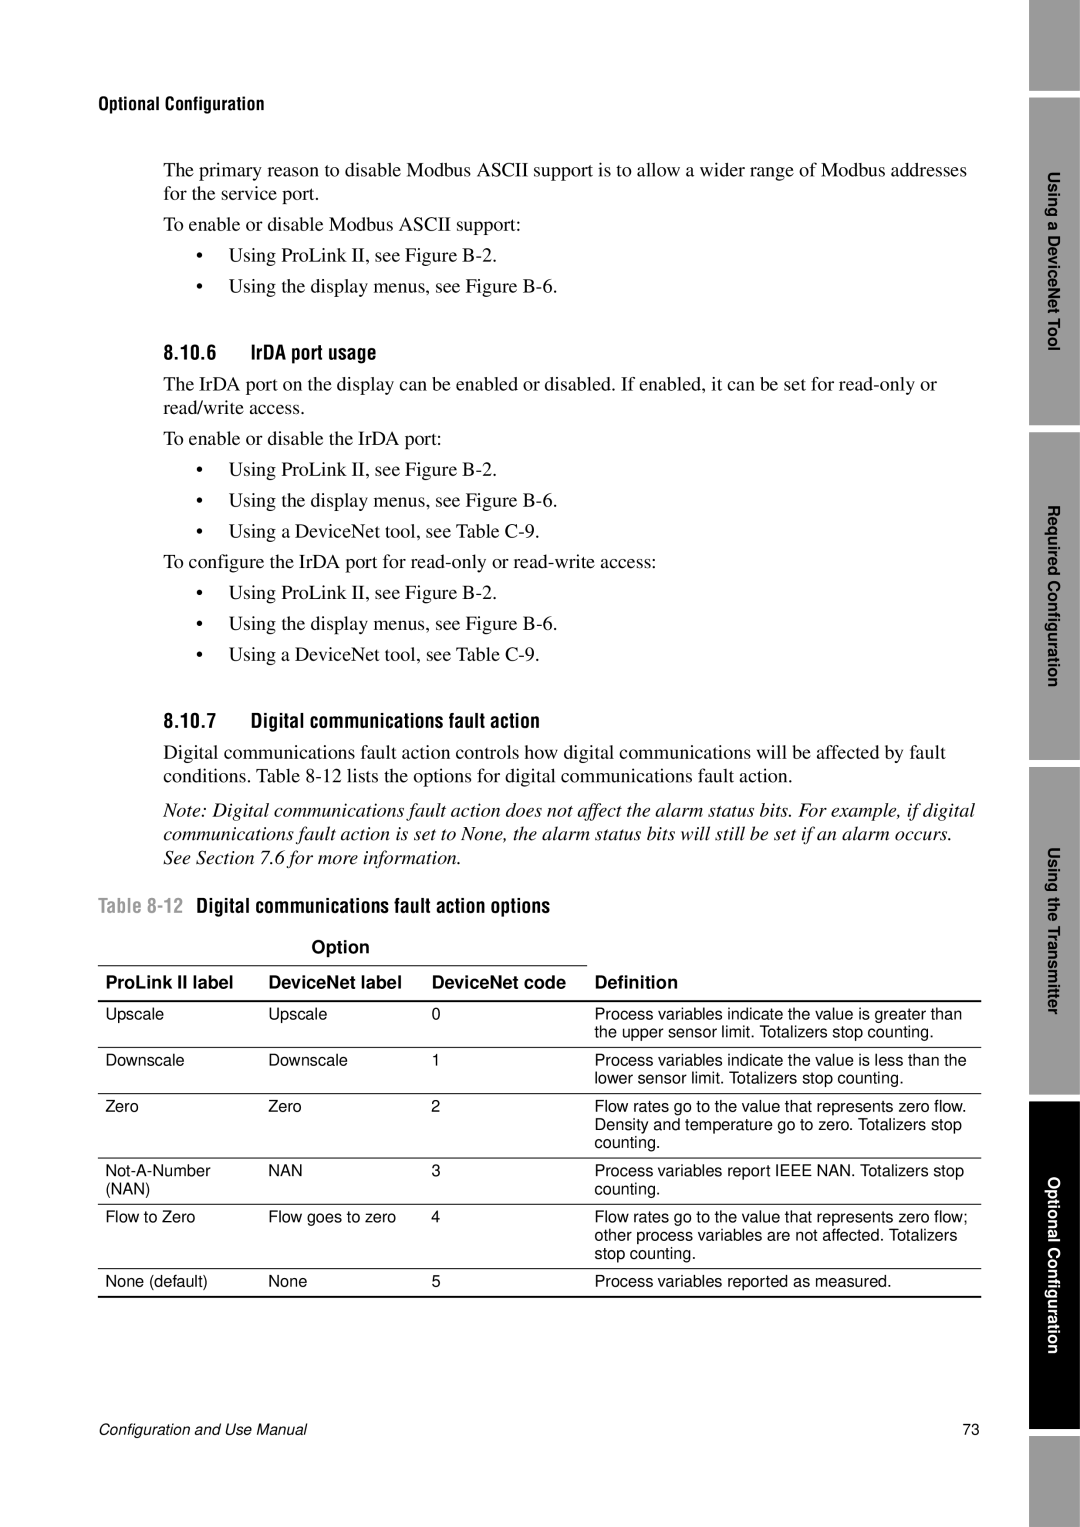 Emerson Process Management 2400S manual 8.10.6IrDA port usage, 8.10.7Digital communications fault action 